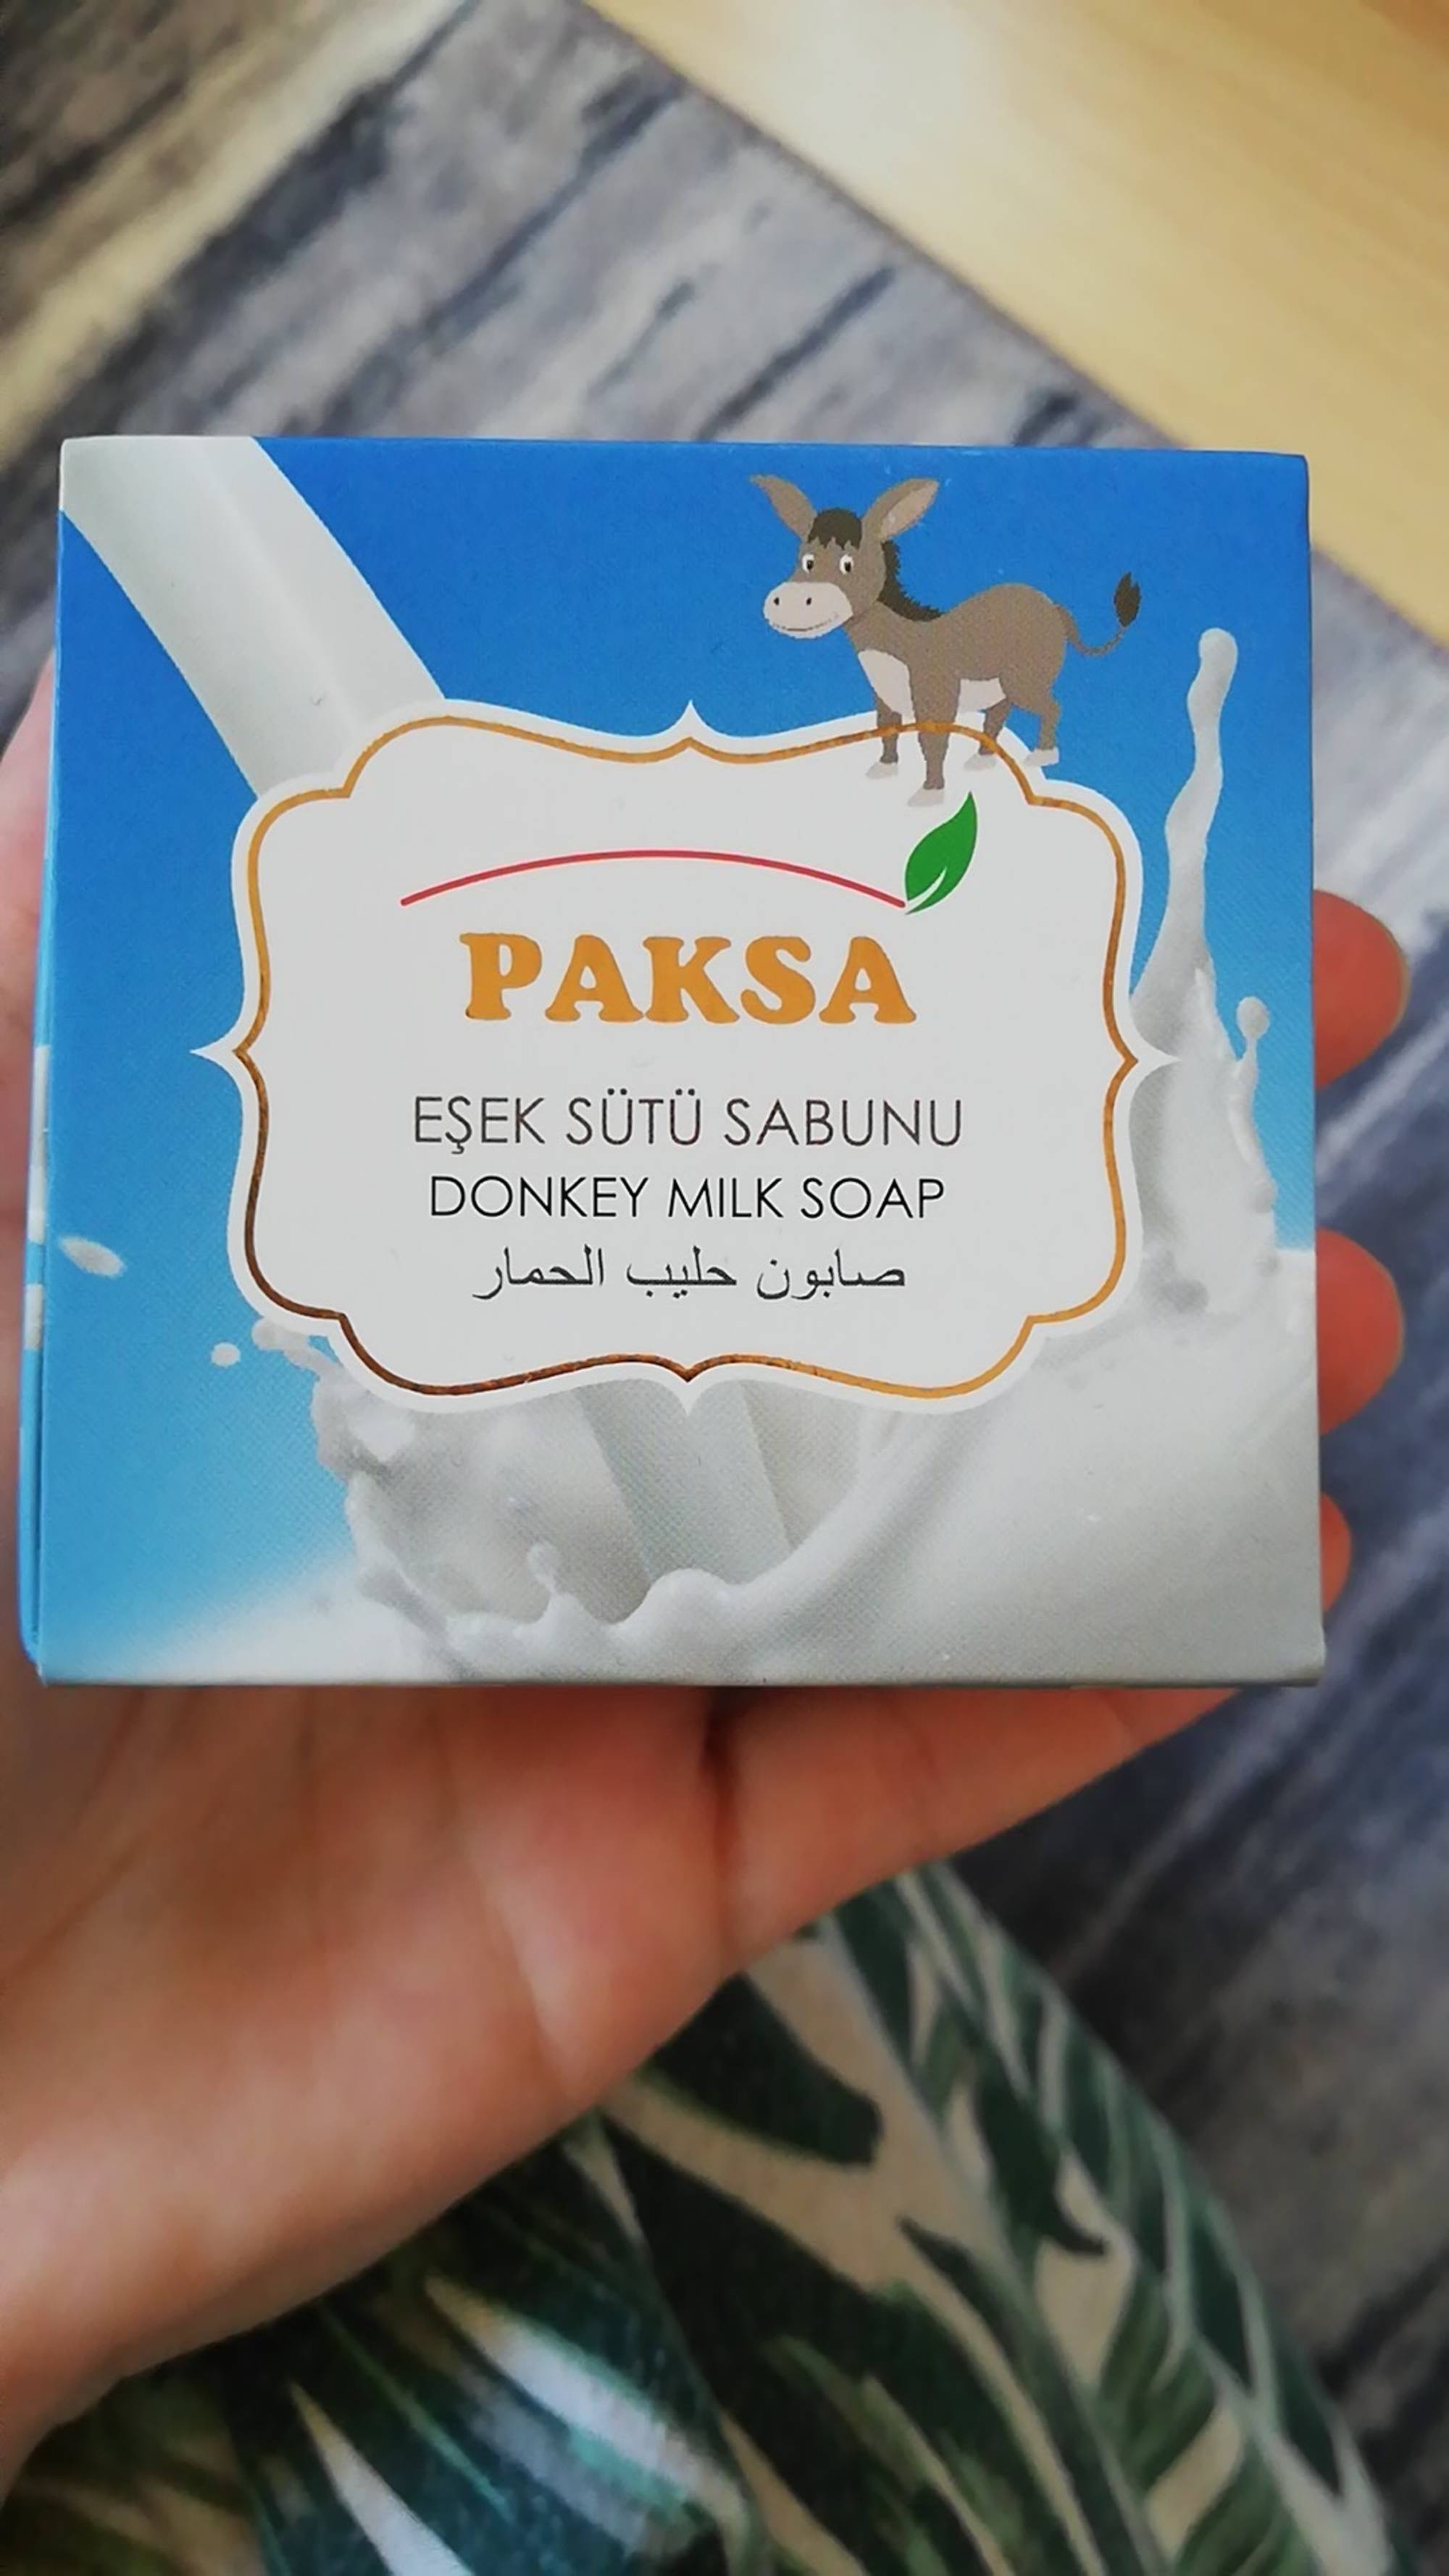 PAKSA - Donkey milk soap